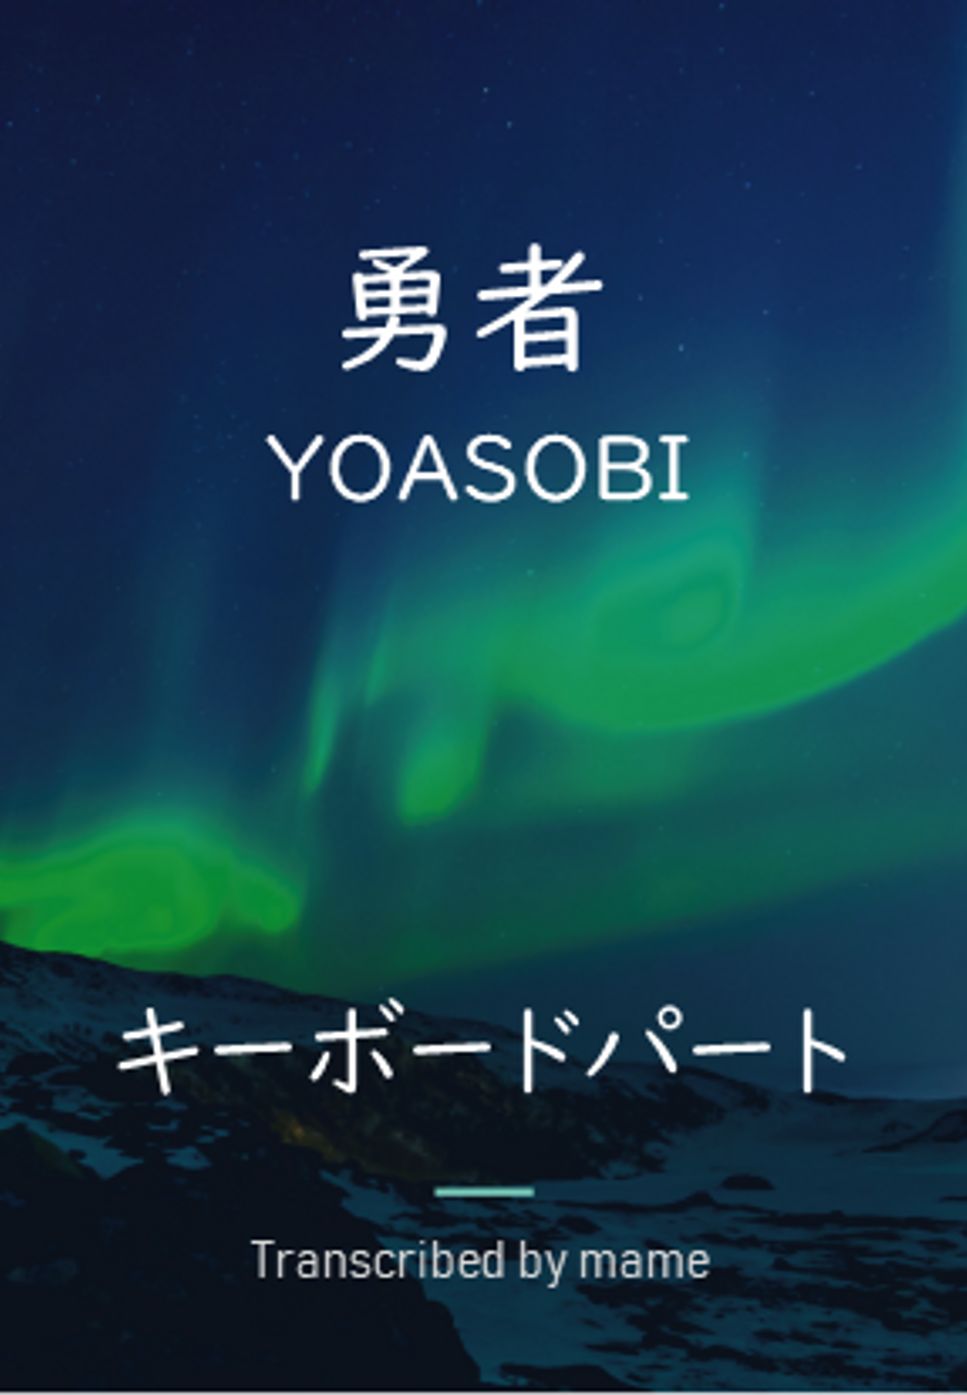 YOASOBI - 勇者 (キーボードパート) by mame